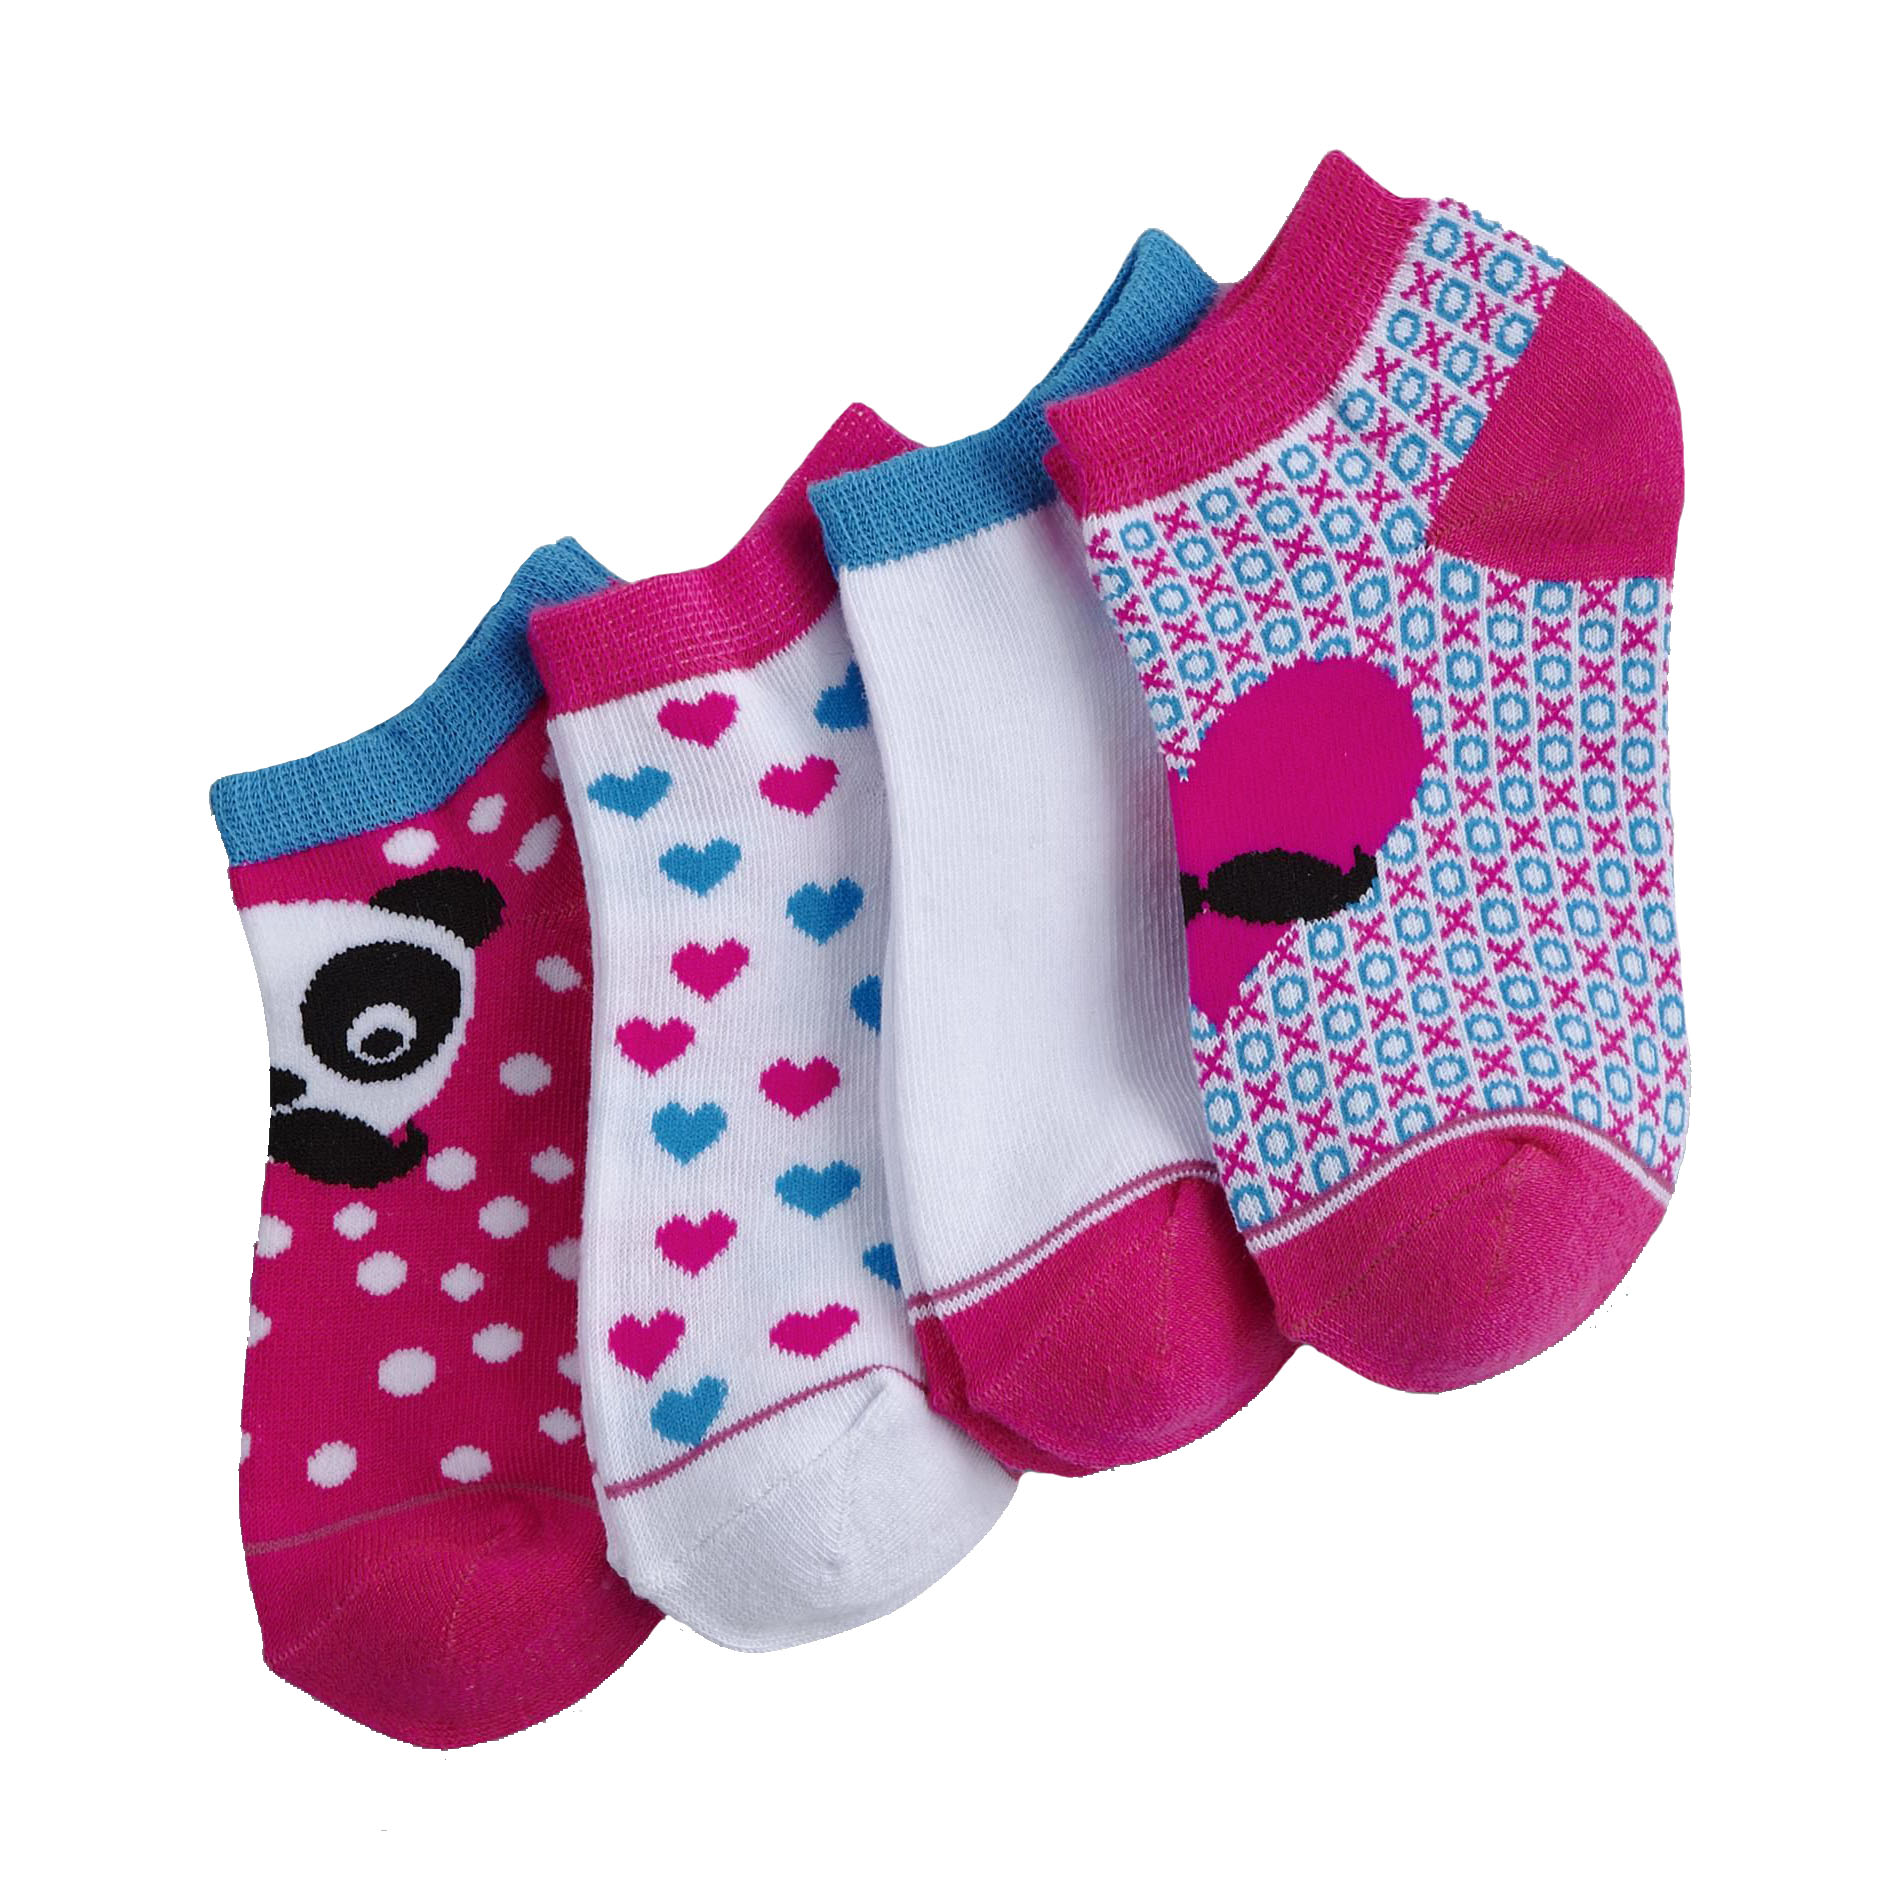 Joe Boxer Girl's Low-Cut Patterned Socks - 4 Pk.